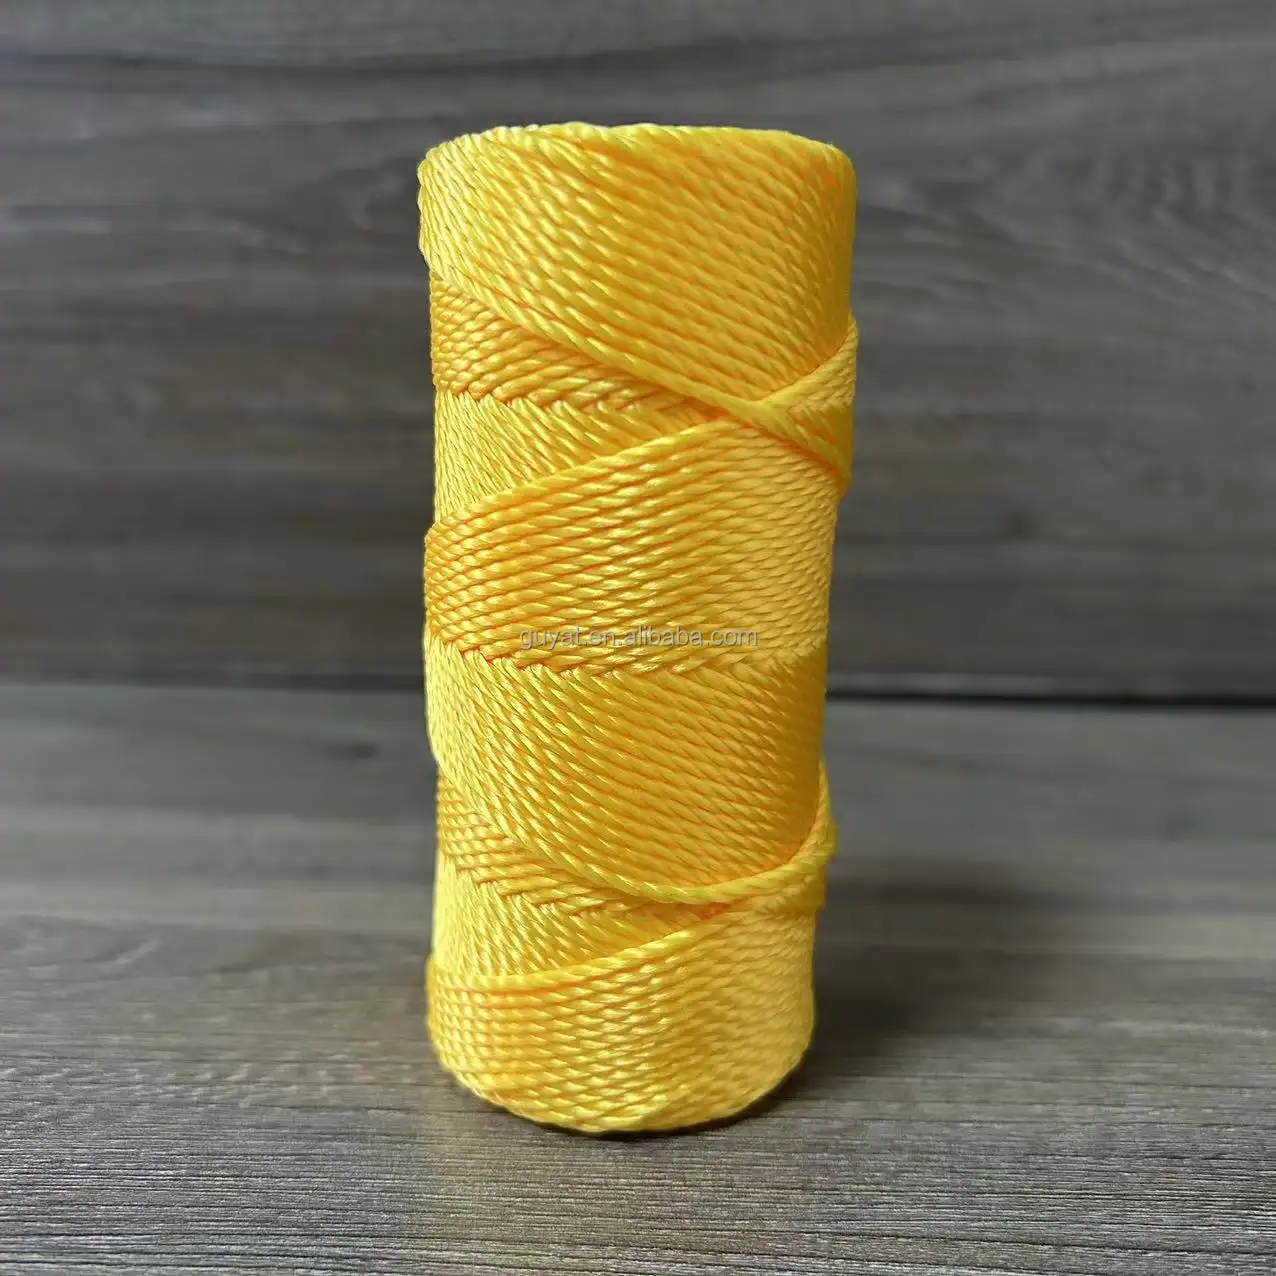 Warna kuning #18 Twisted Mason Line nilon batu tali garis twine DIY proyek kerajinan bisnis berkebun perangkat keras toko